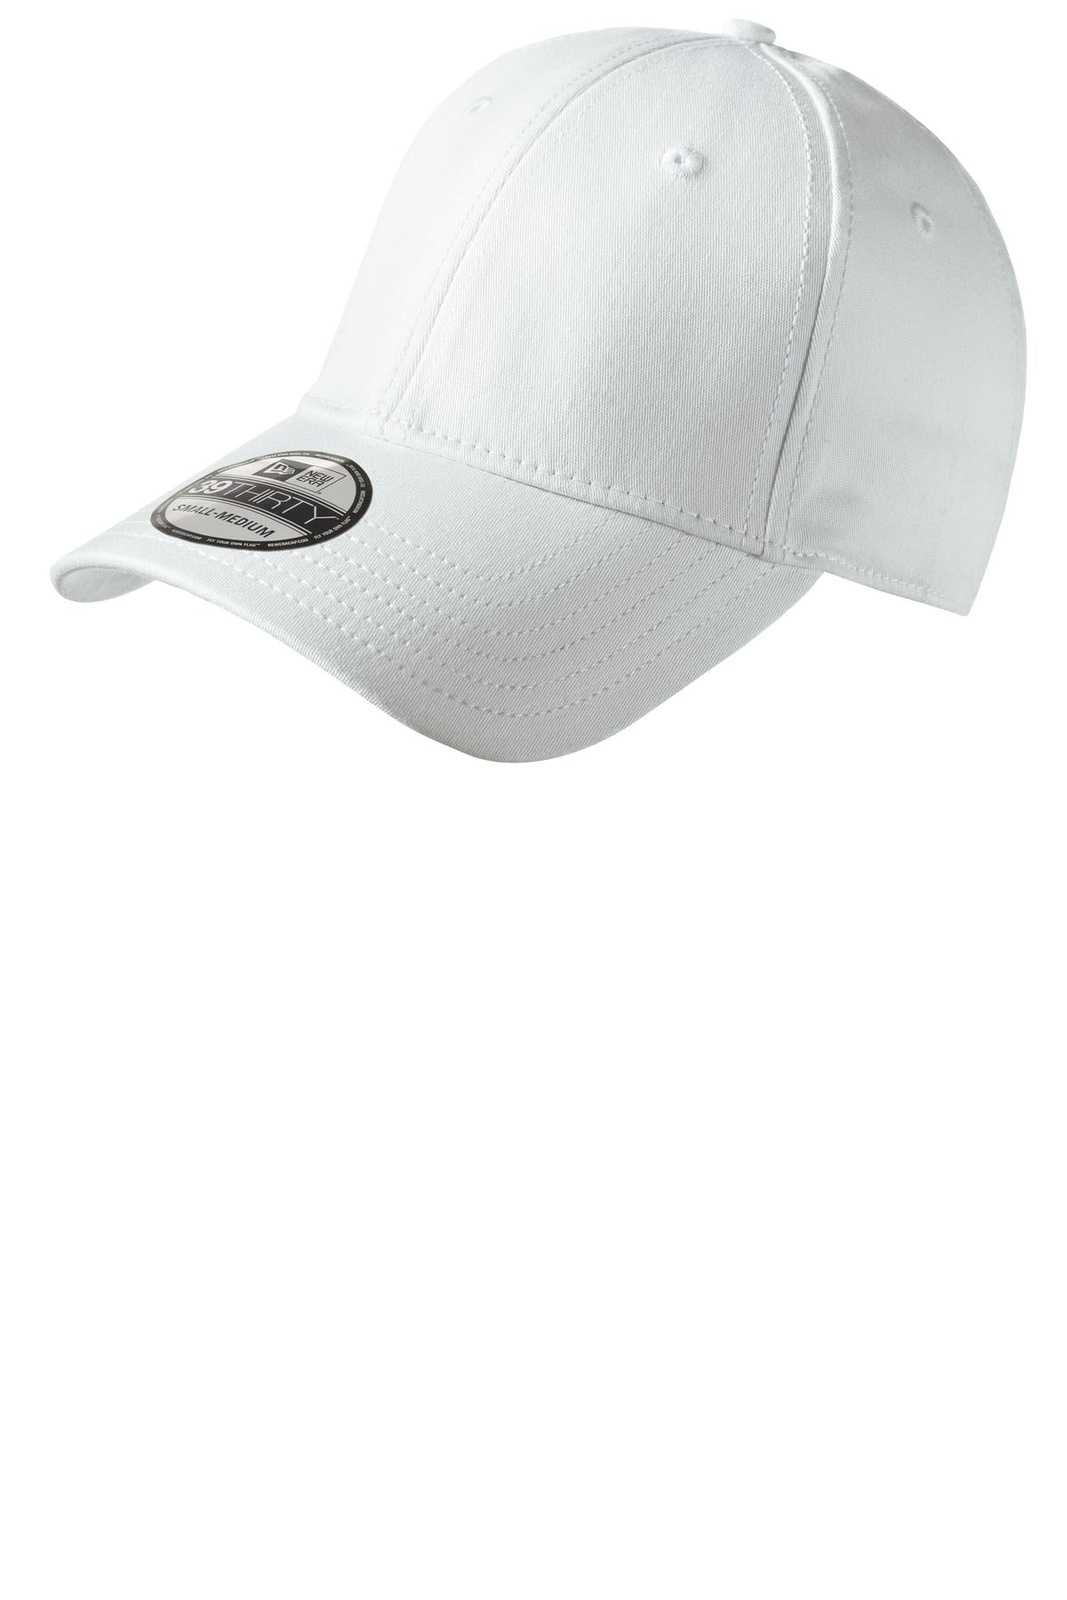 New Era NE1000 Structured Stretch Cotton Cap - White - HIT a Double - 1